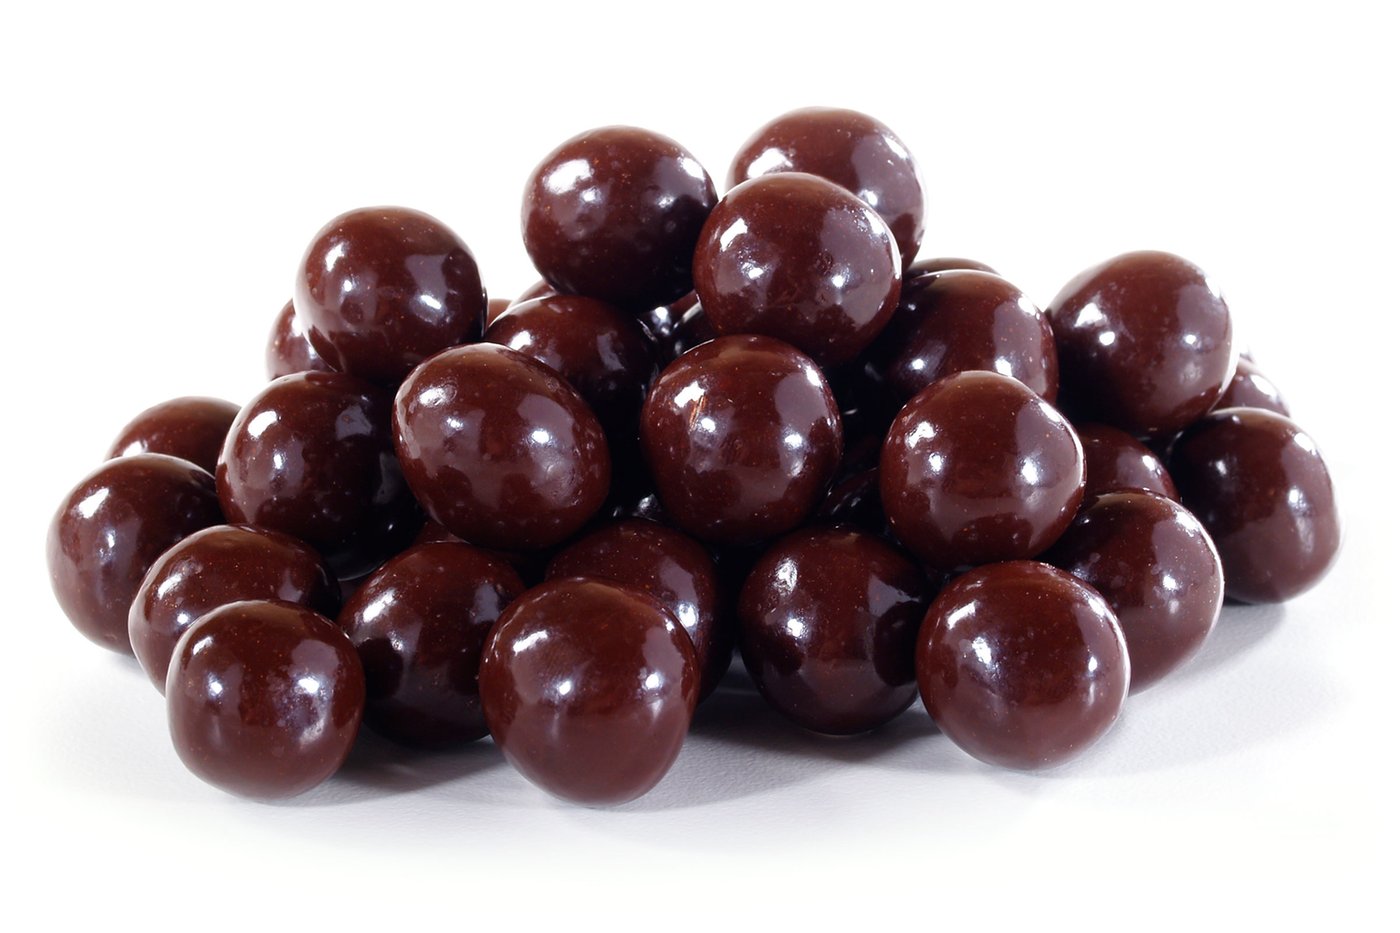 Dark Chocolate Covered Hazelnuts image zoom